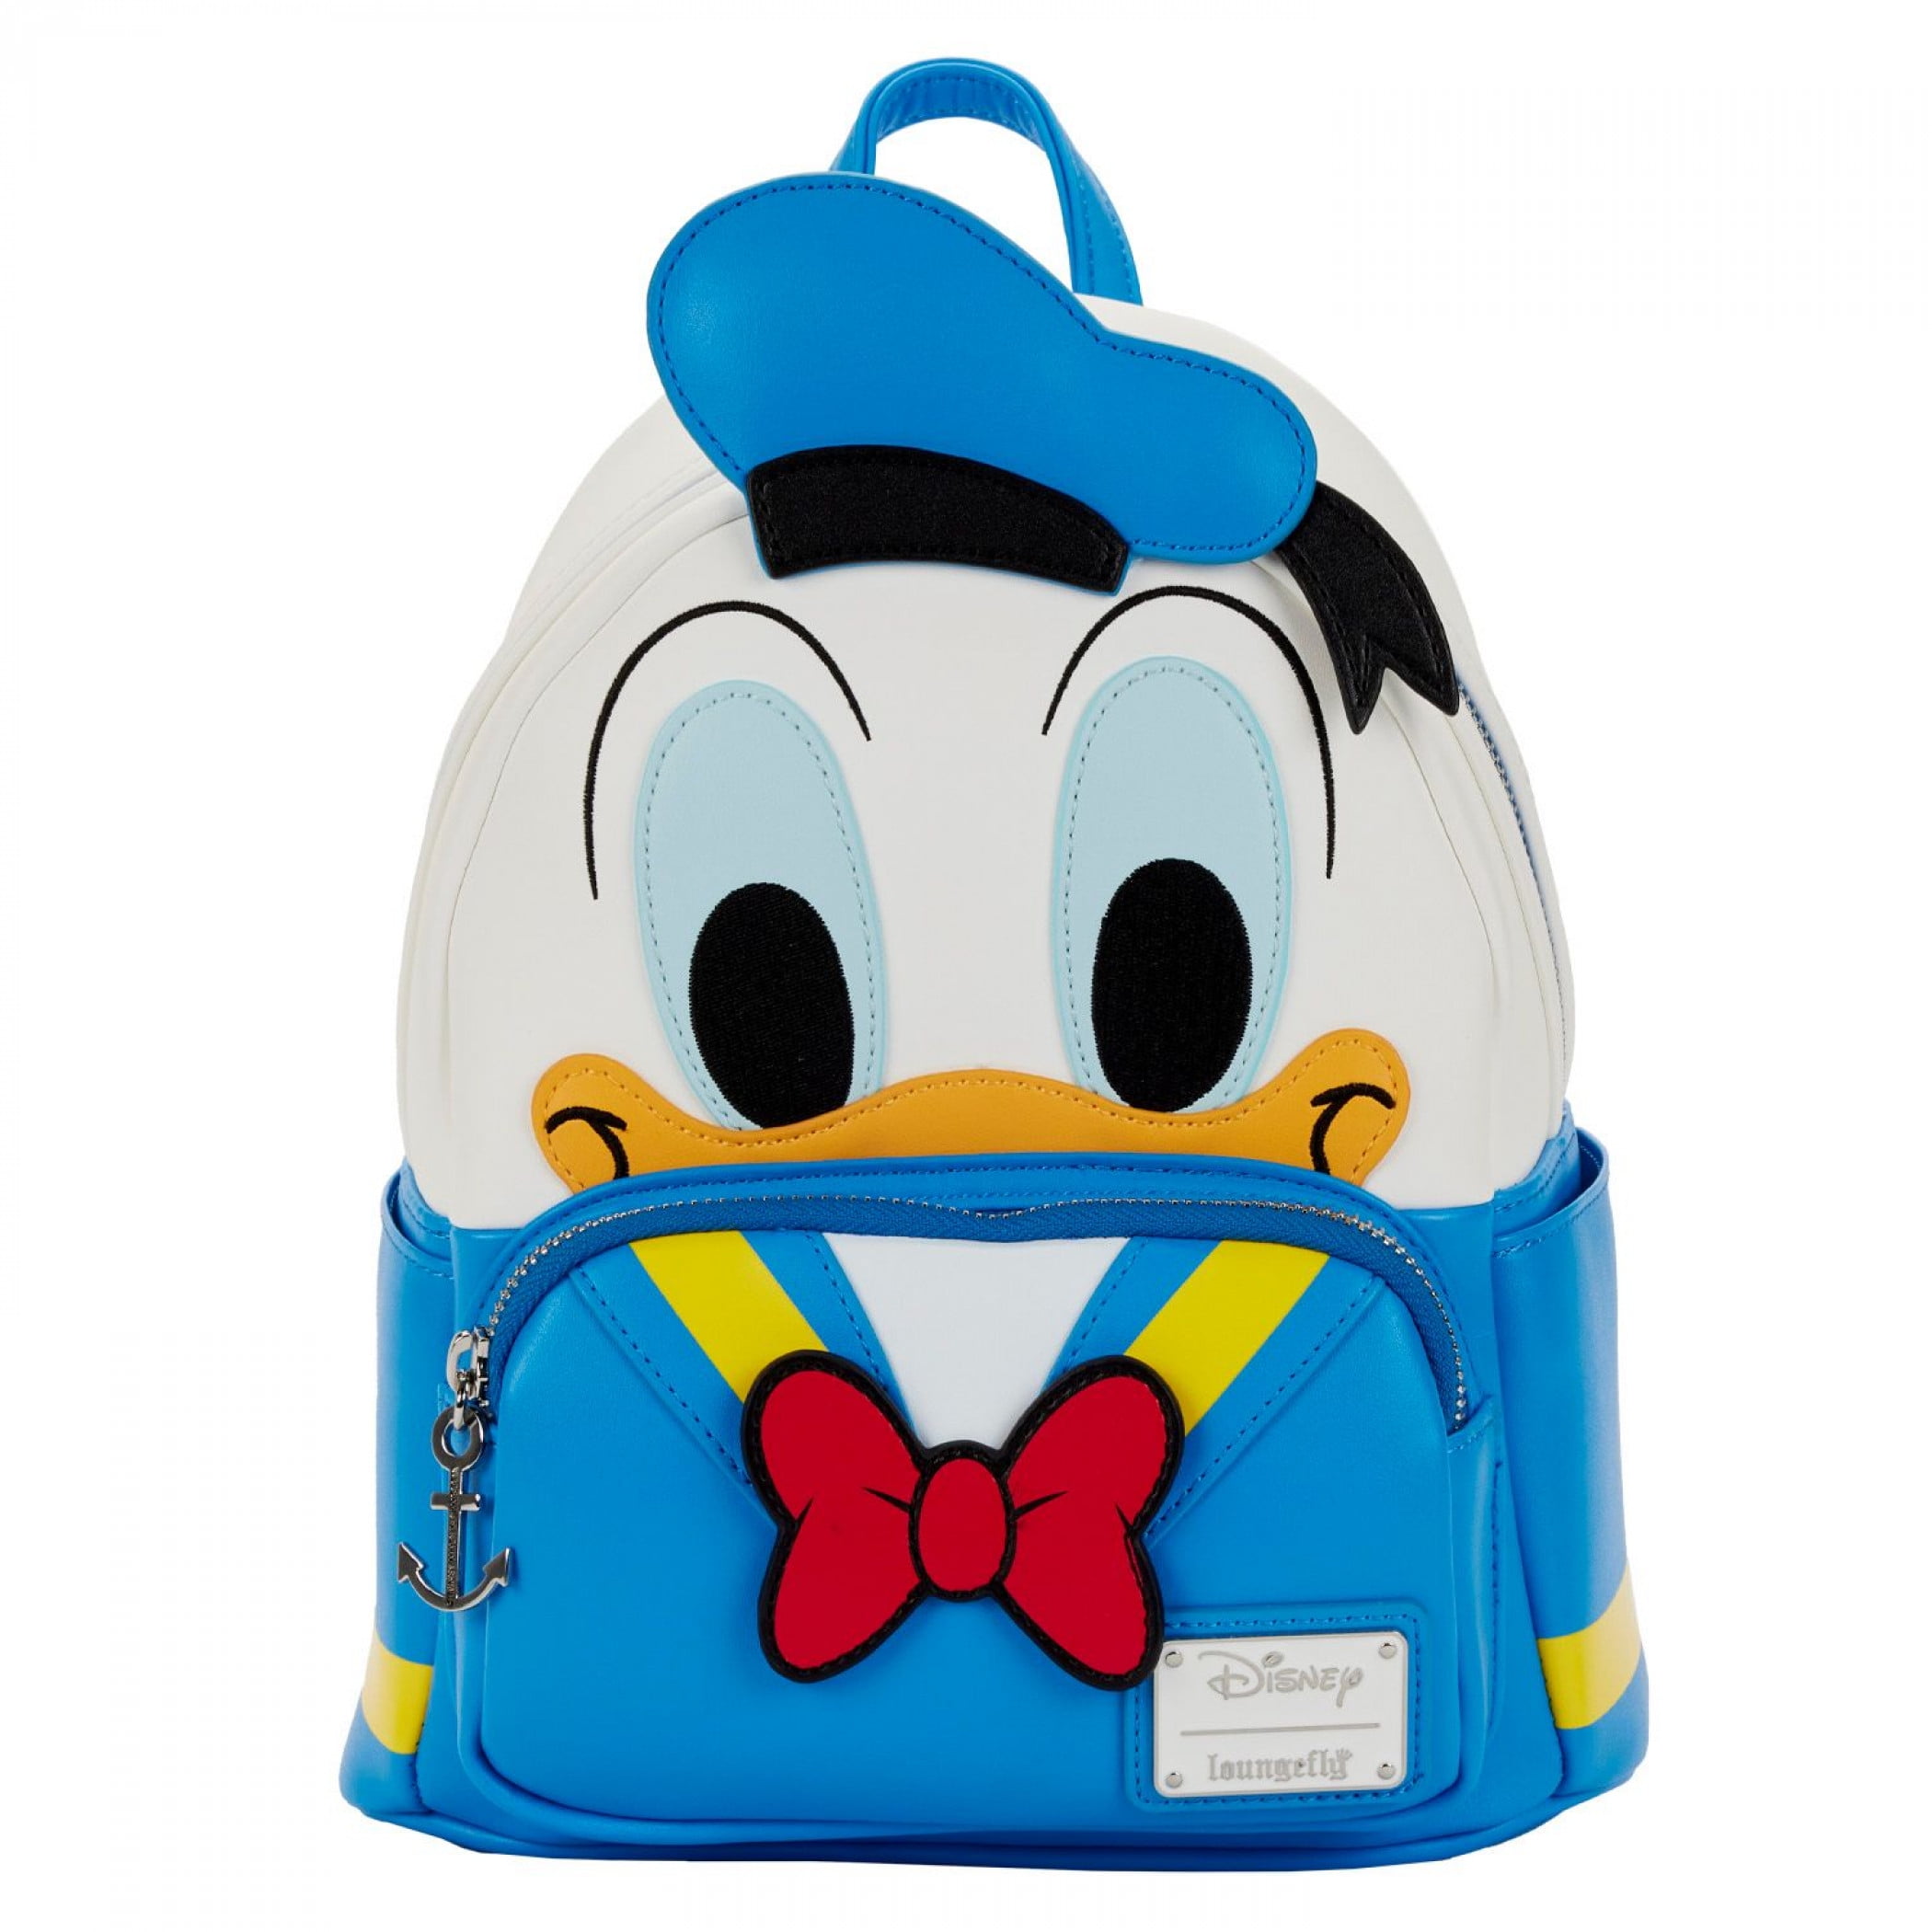 NEW Disney Daisy Donald Duck head shoulder Bag Coin bag phone bag